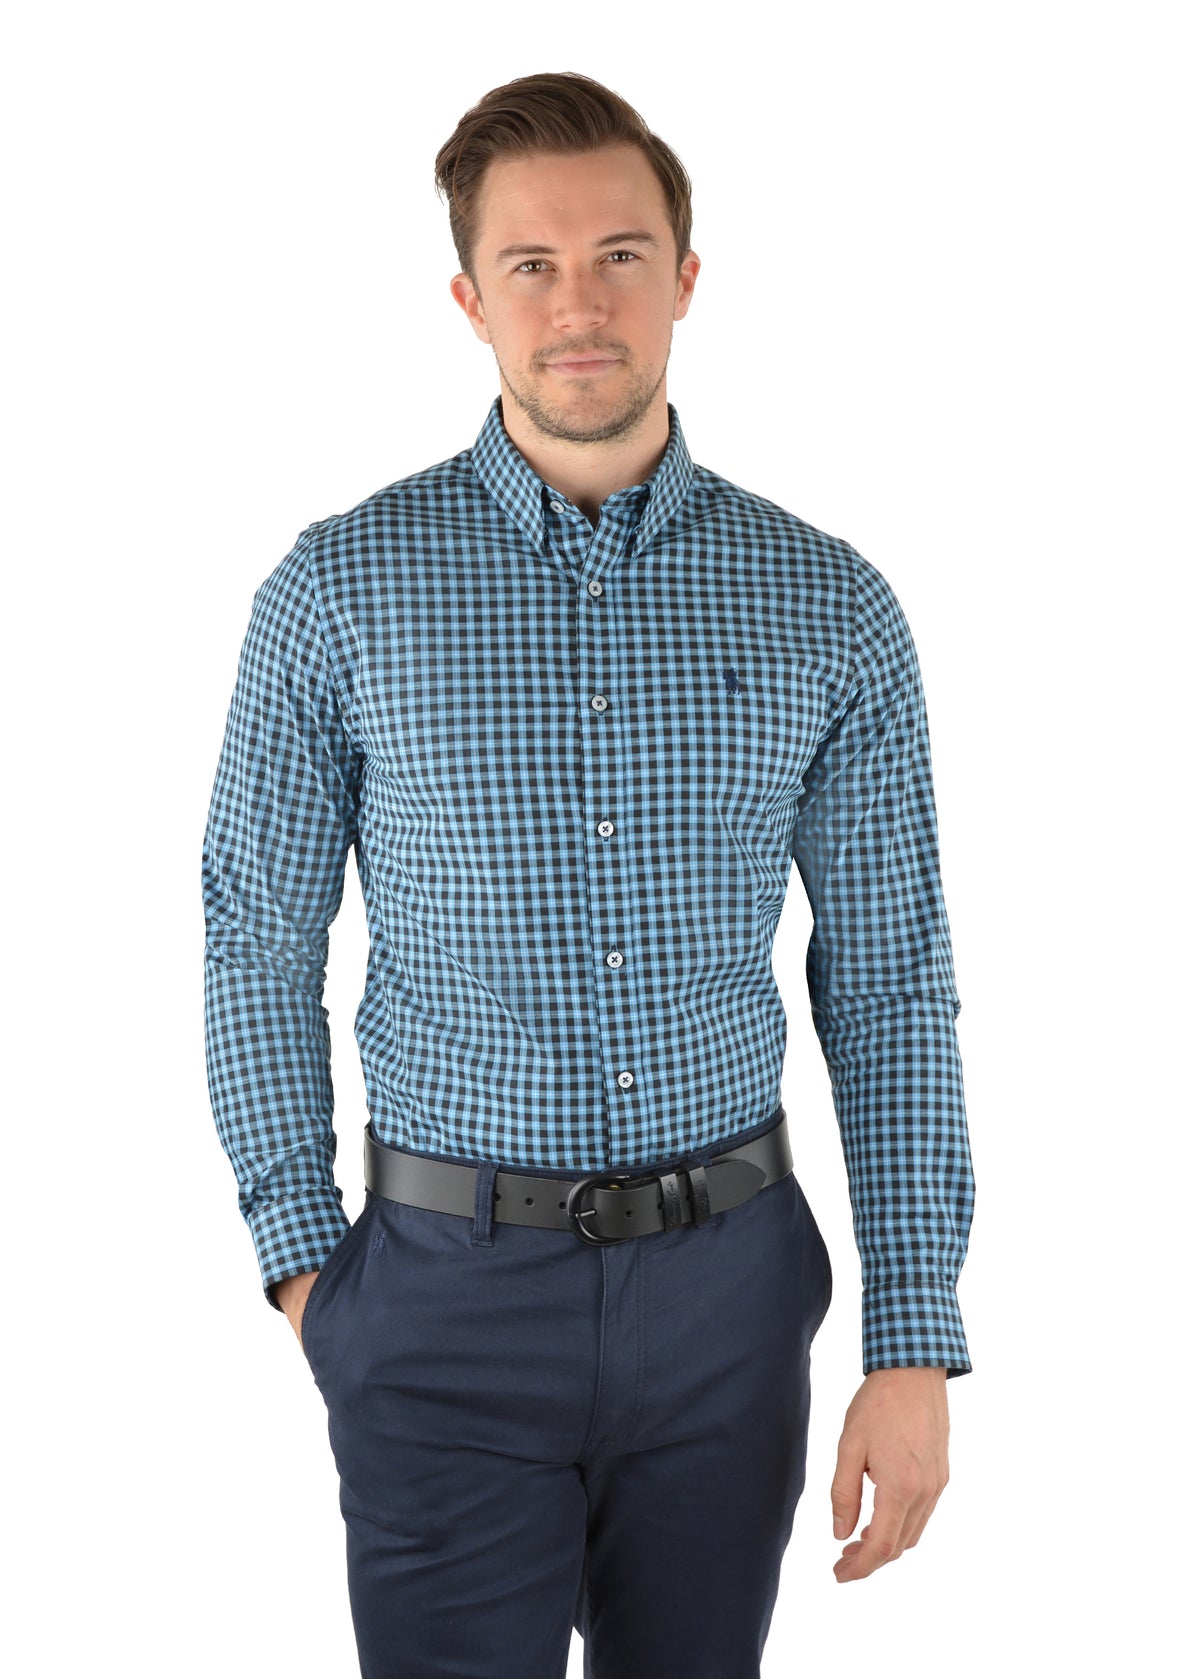 Thomas Cook Mens Norton Check Tailored Shirt - Black/Blue